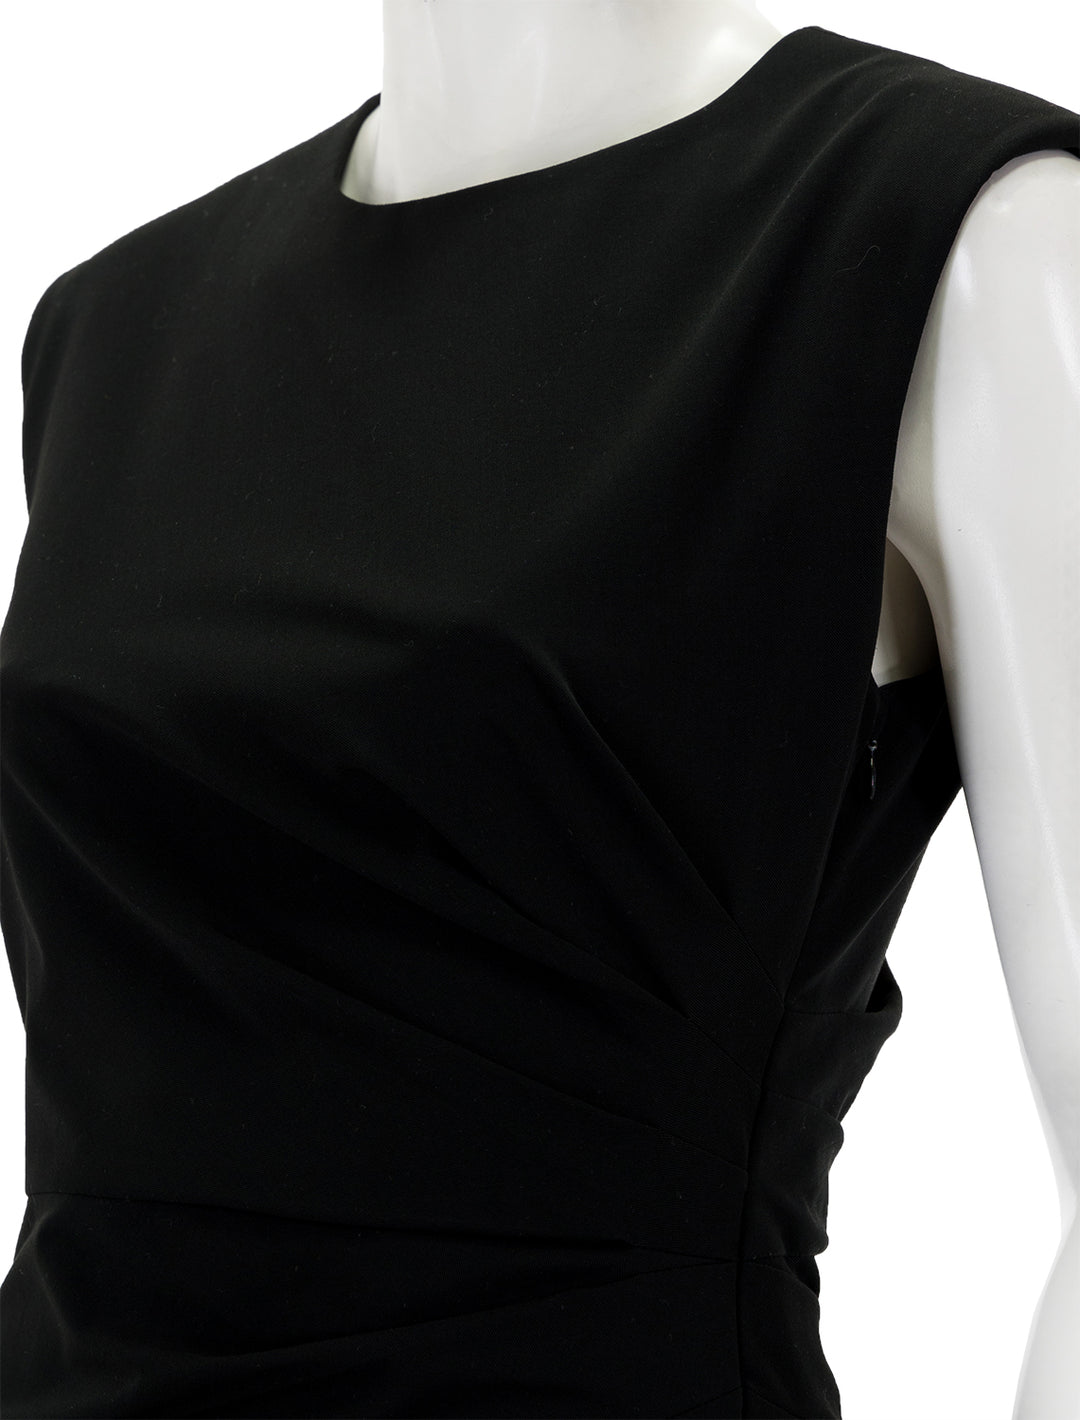 Close-up view of Veronica Beard's latiki dress in black.